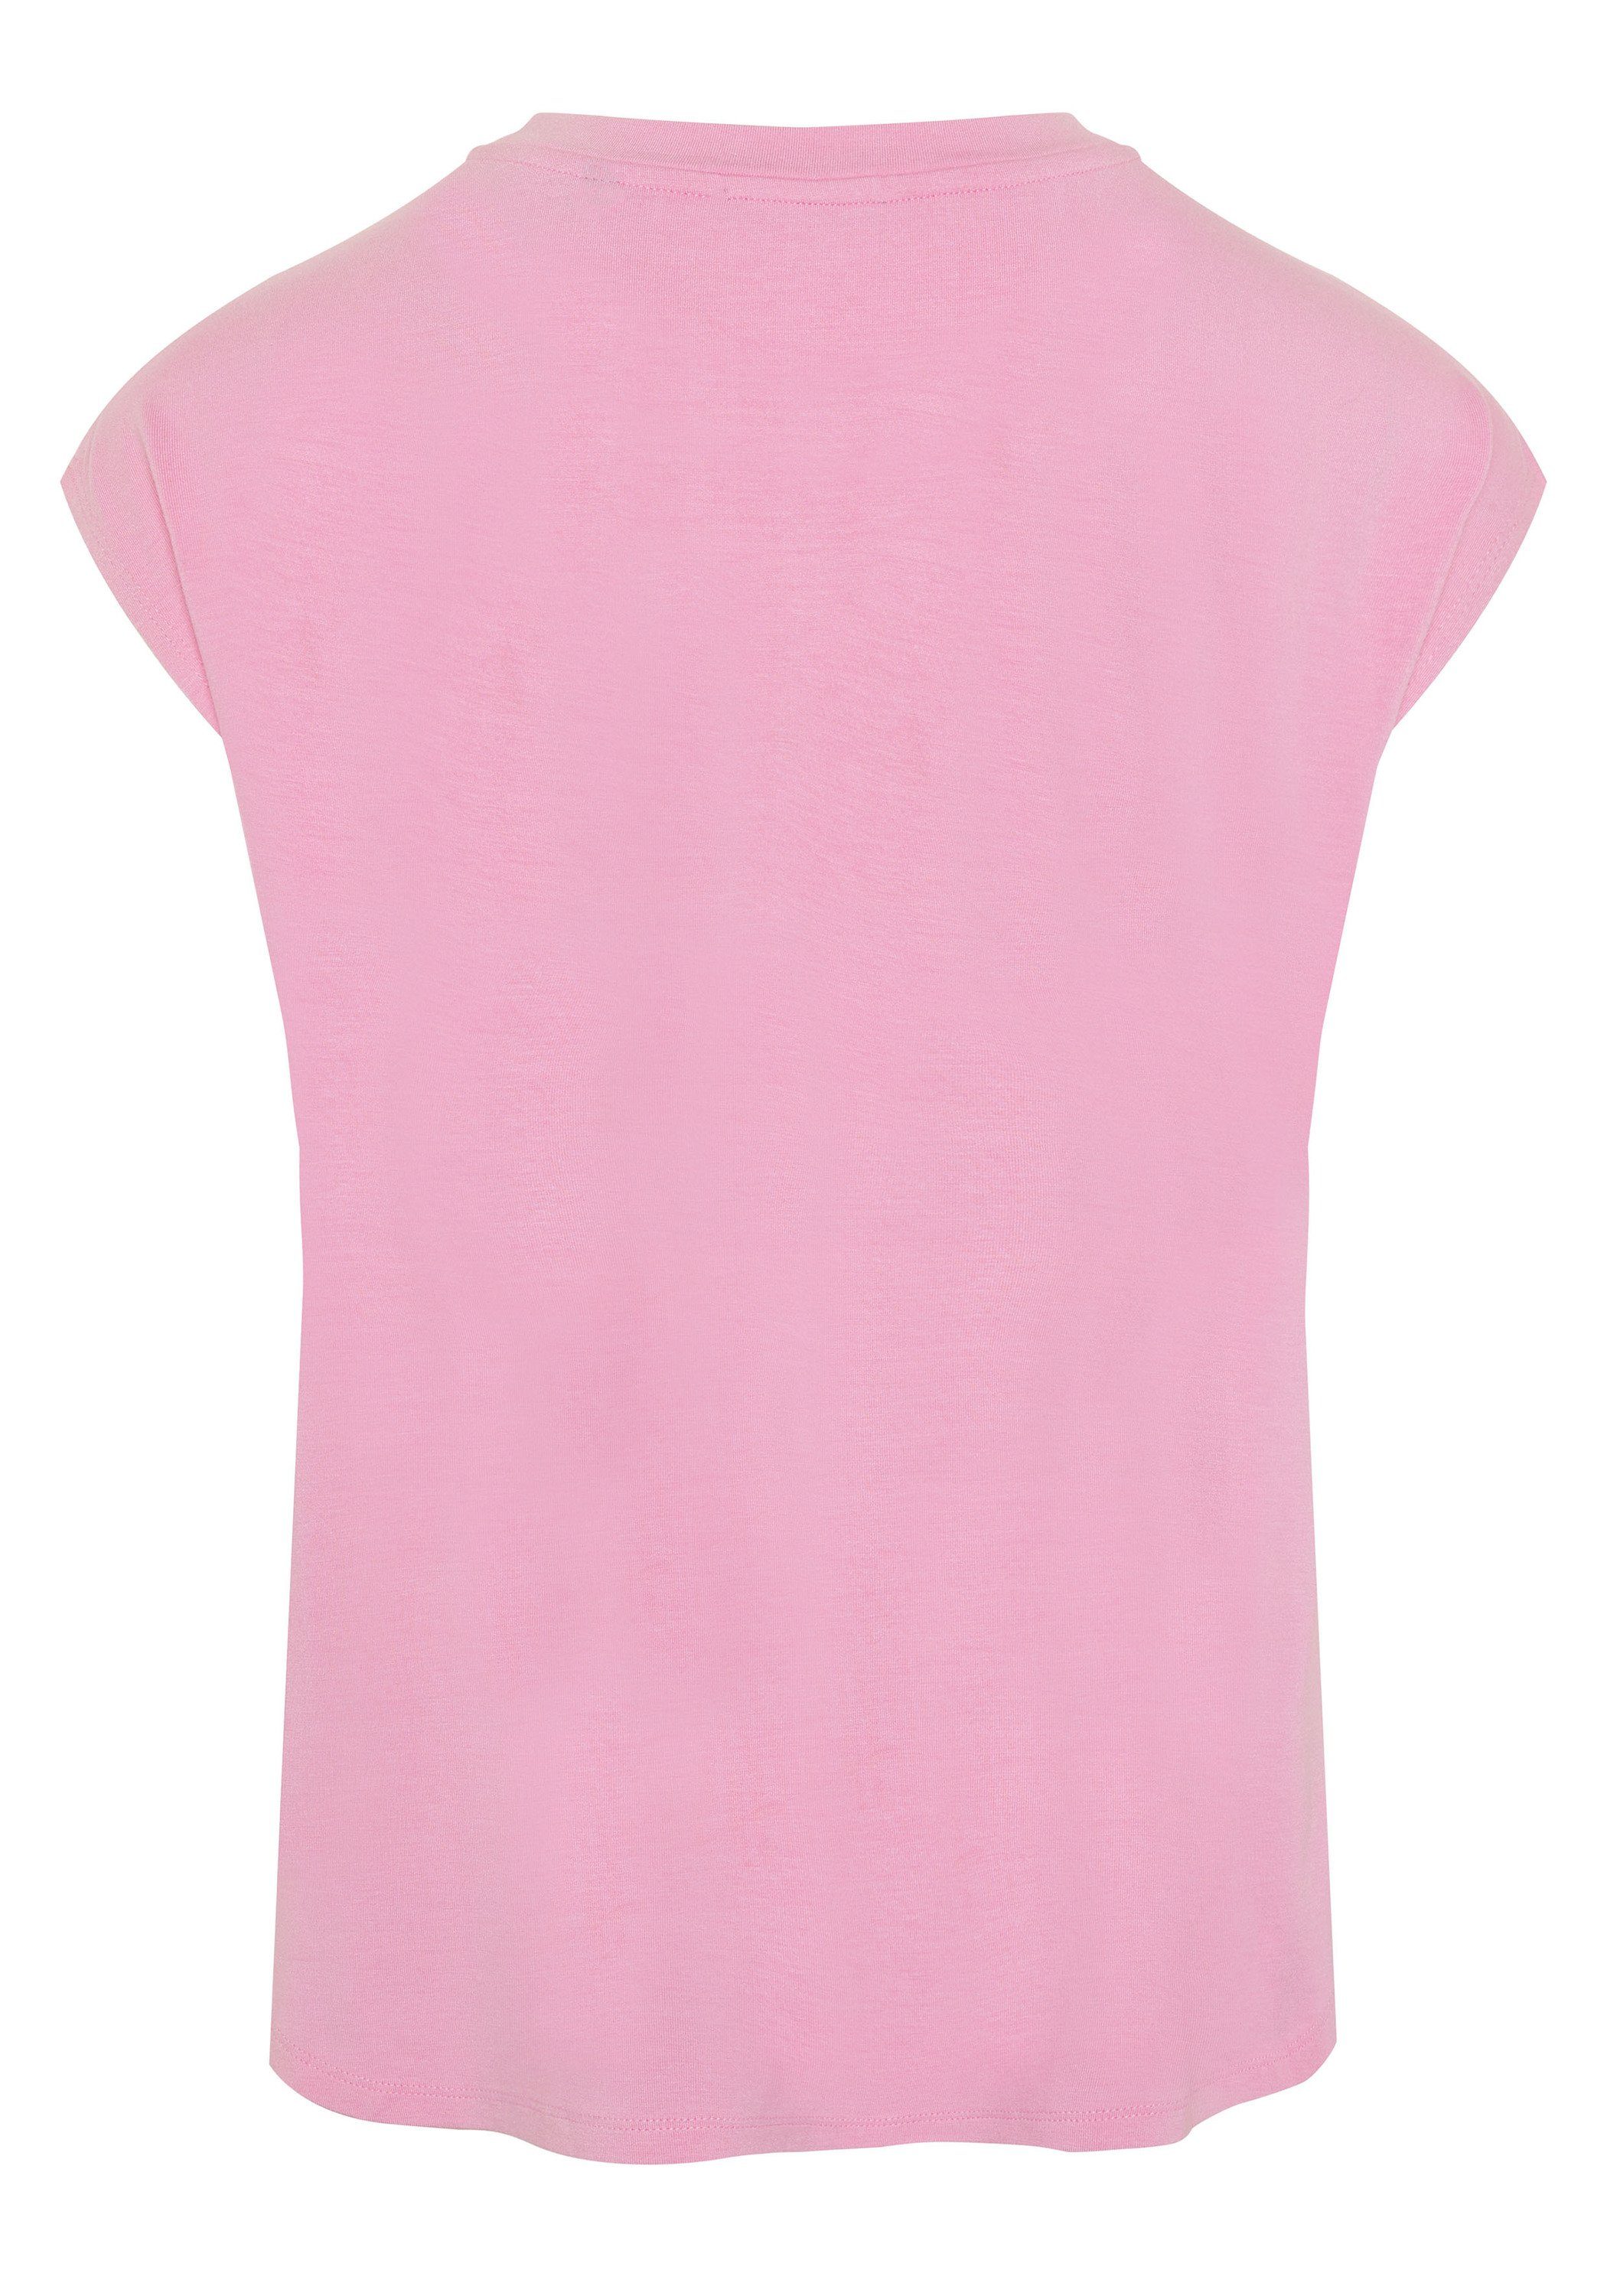 Labelprint 1 Pink mit Prism aus Chiemsee Print-Shirt Viskose-Elasthanmix T-Shirt